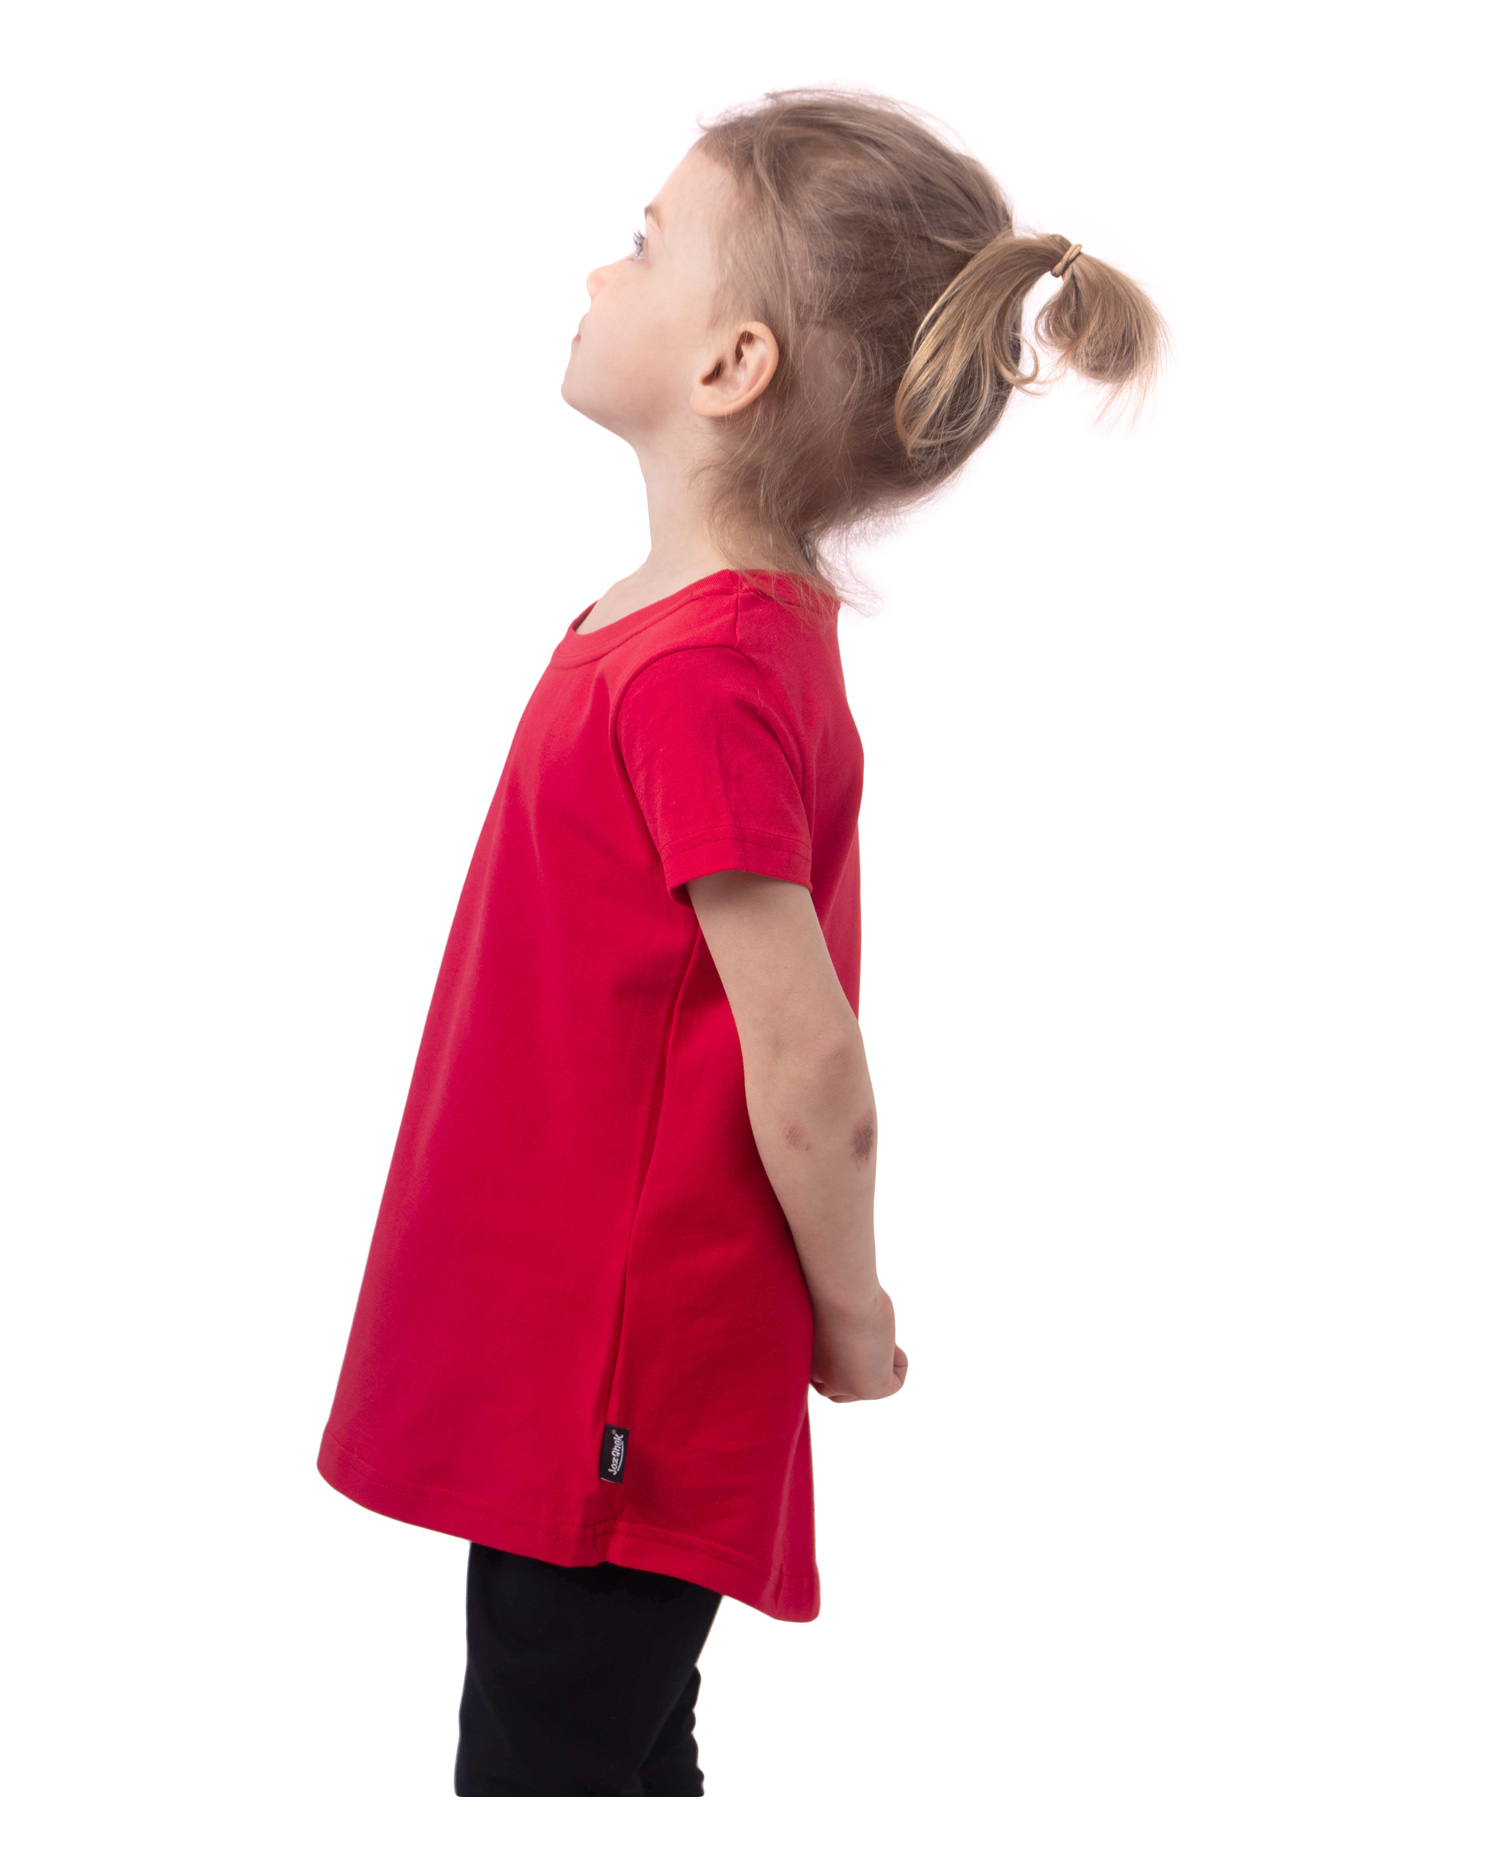 T-shirt für Mädchen, kurzarm, rot